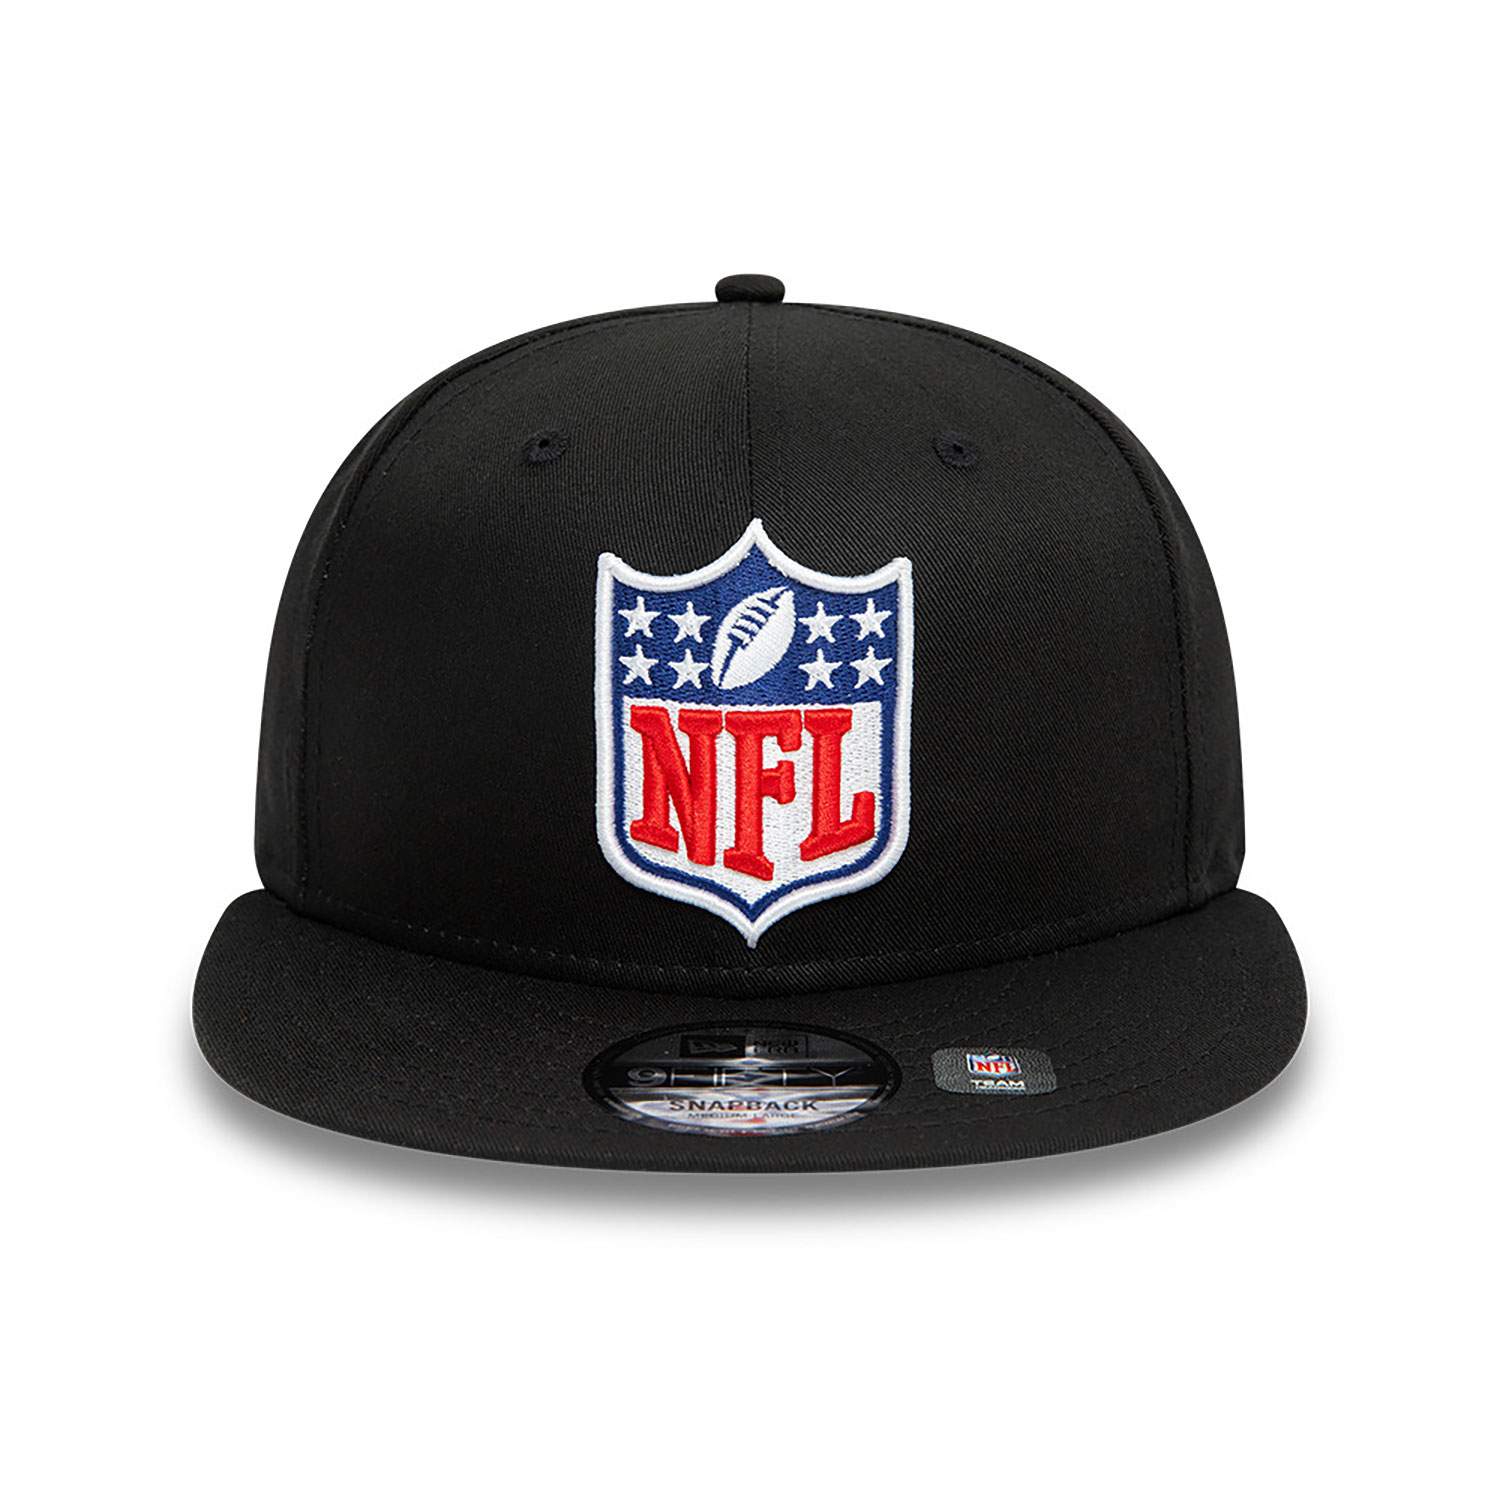 NFL London Games NFL Shield Black 9FIFTY Snapback Cap